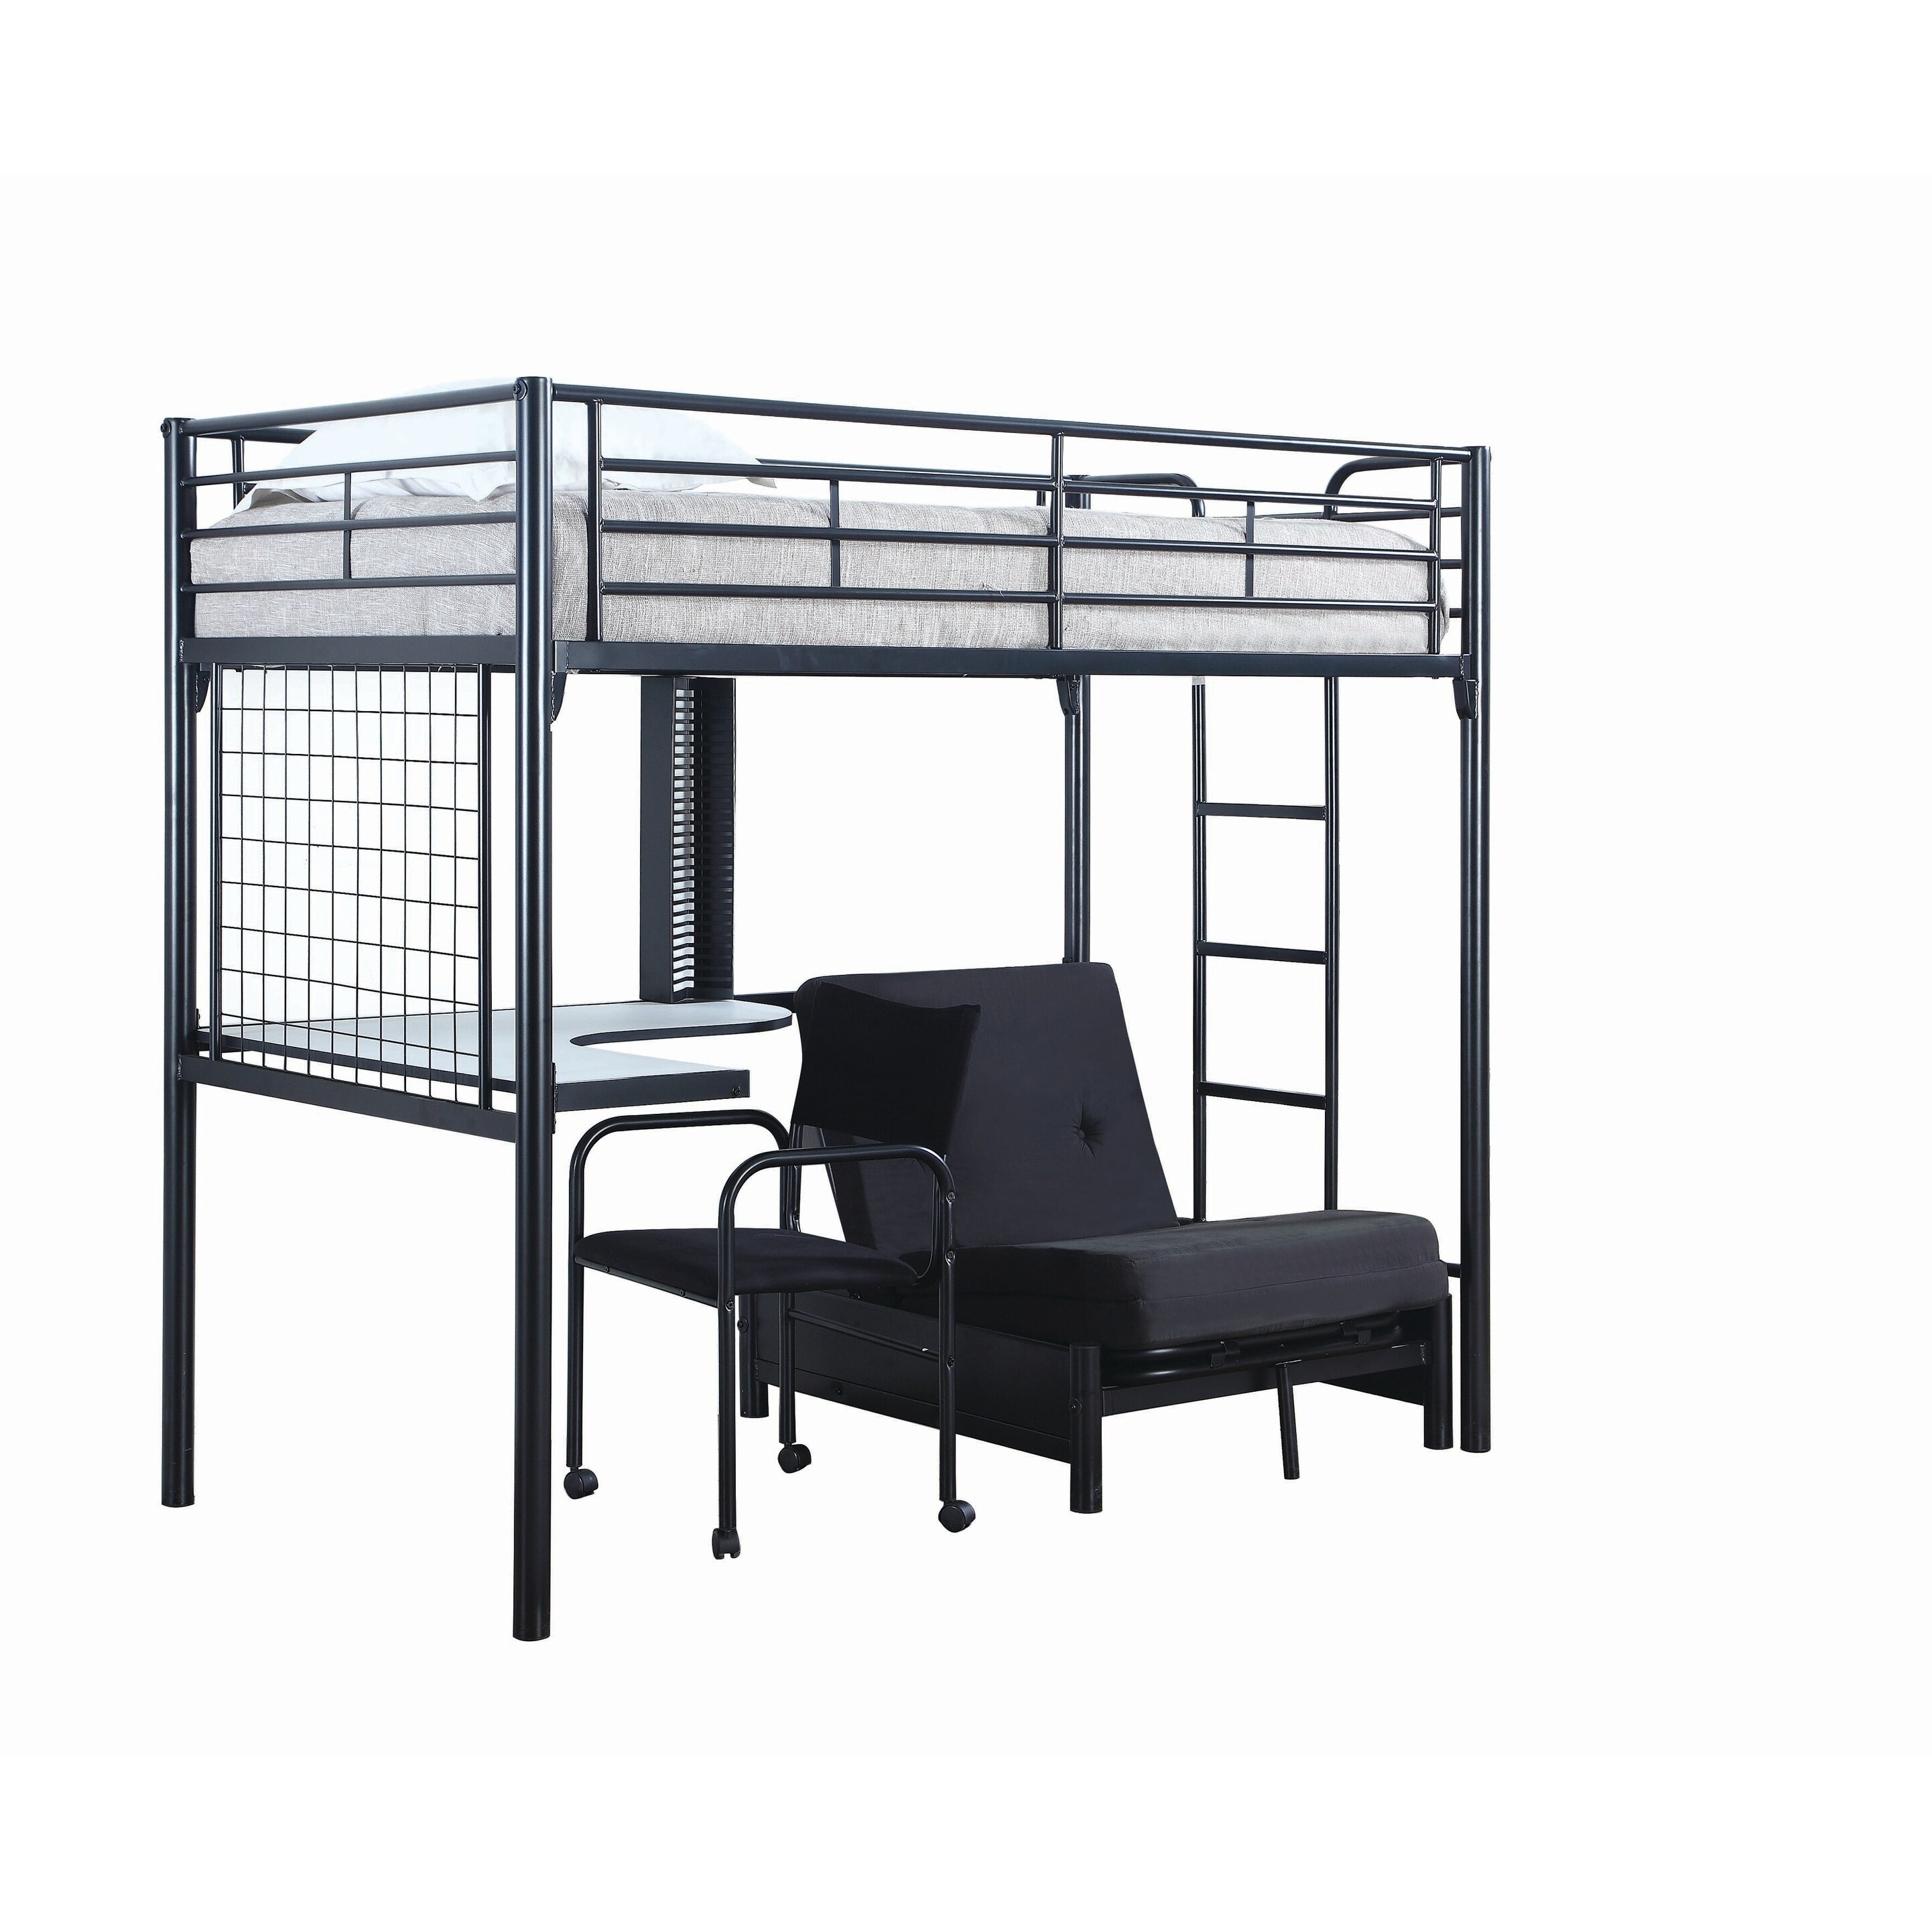 Shop Contemporary Metal Loft Bunk Bed With Desk On Sale